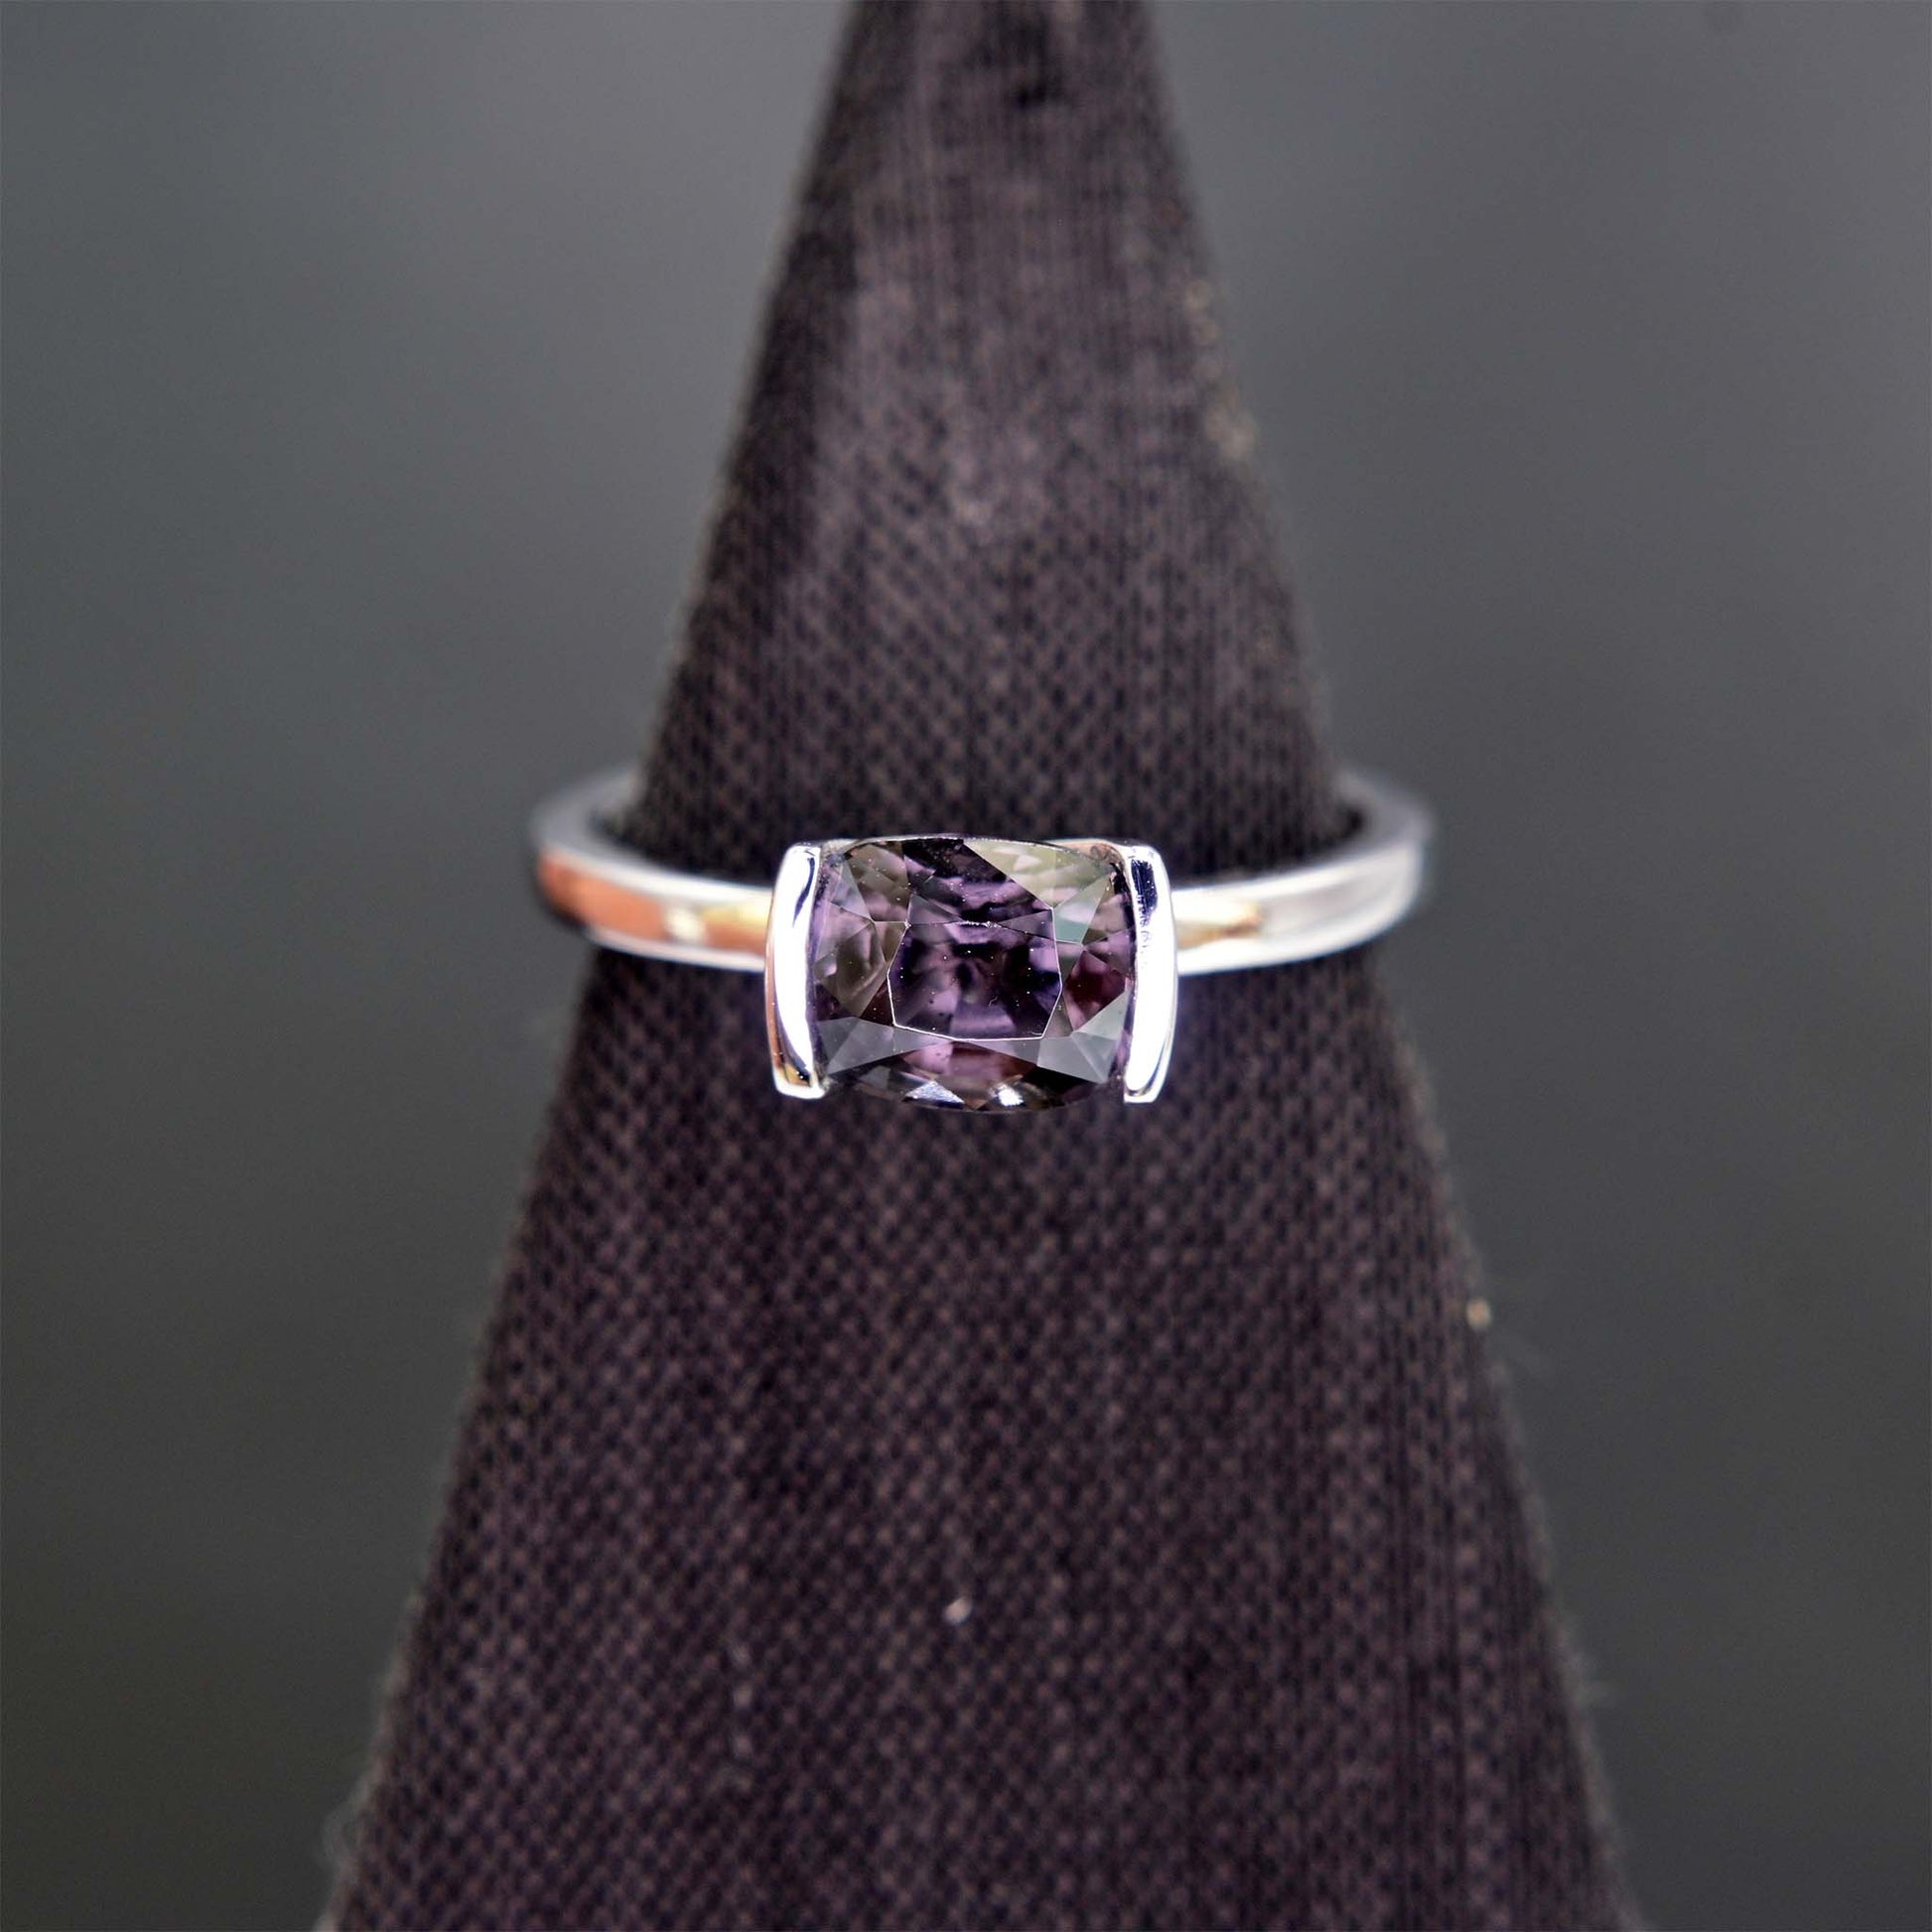 Beautiful handmade ring made by Shiraz Jewelry in Chiang Mai